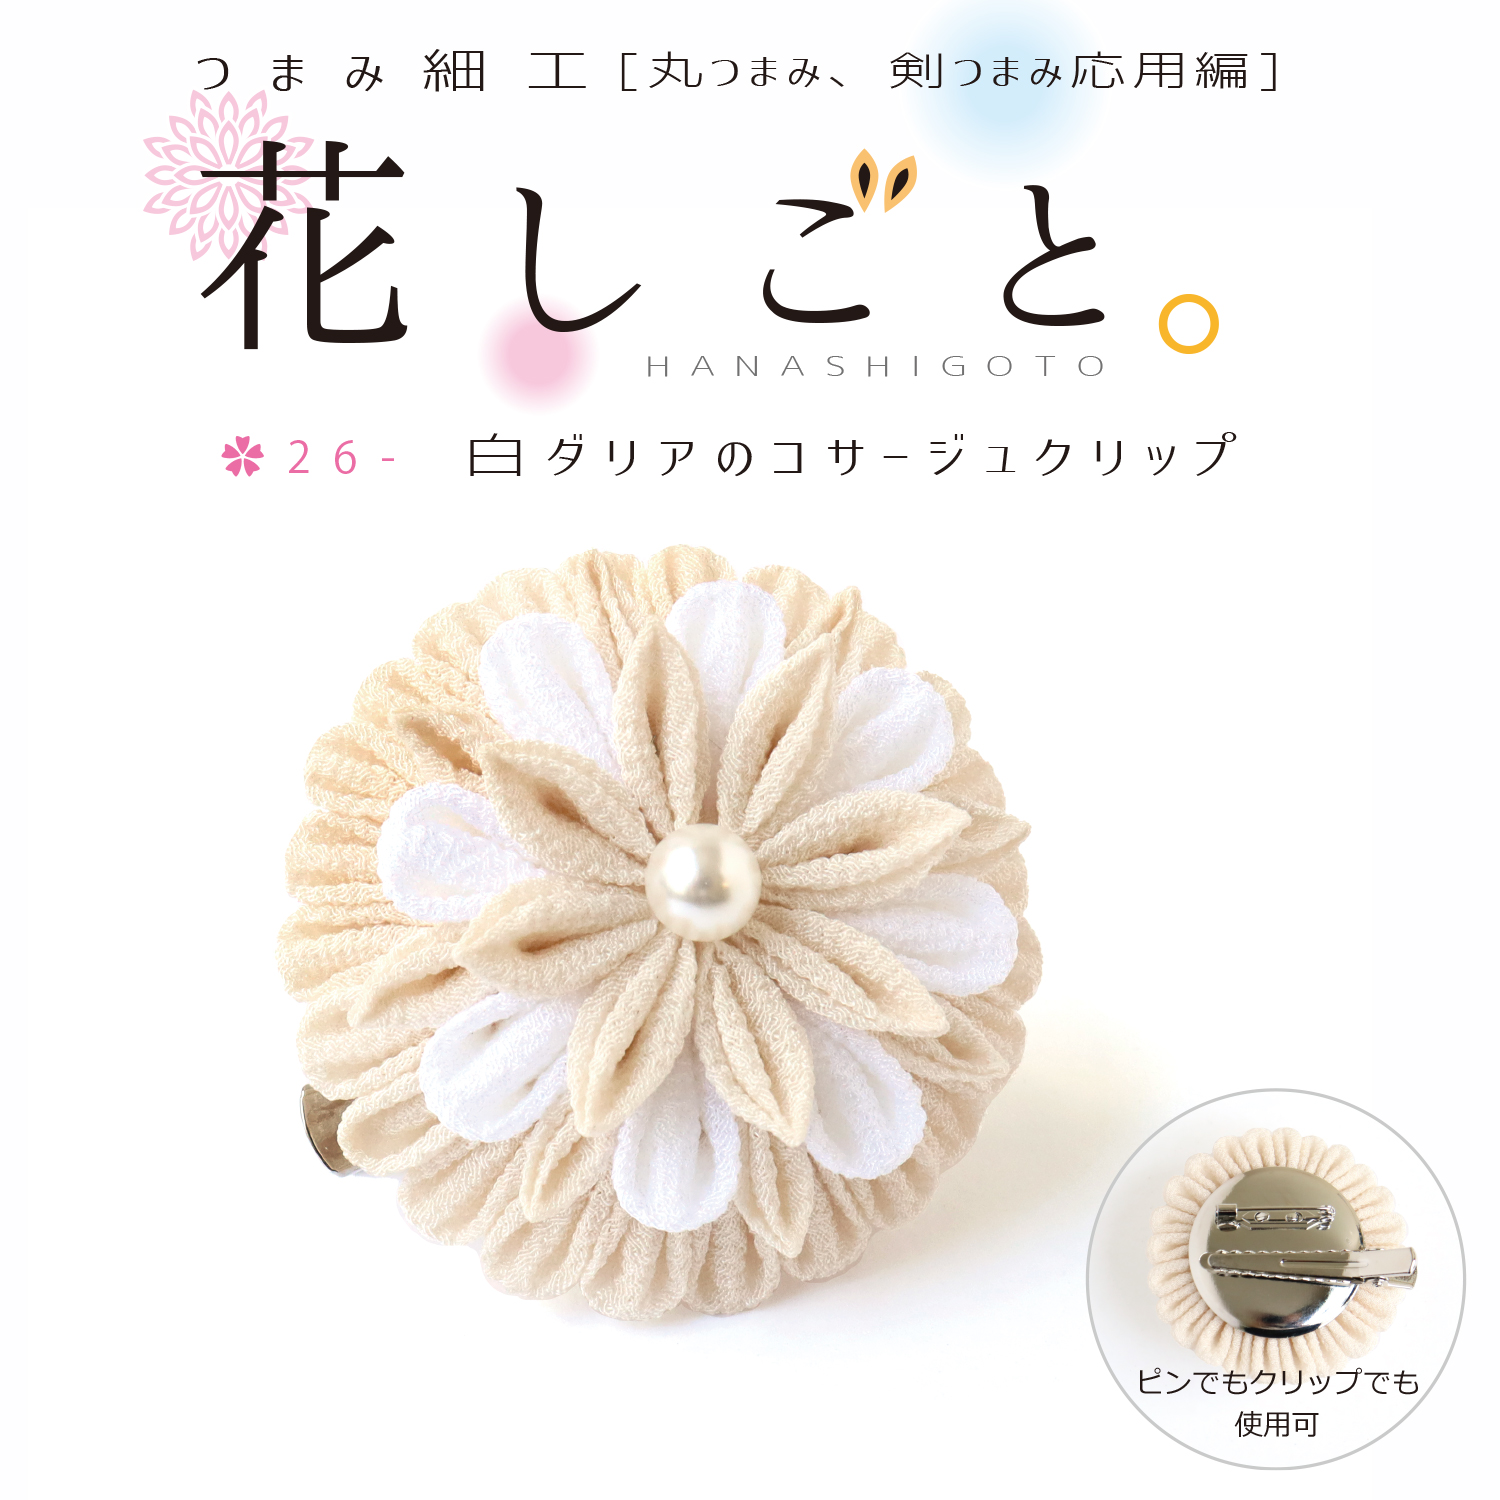 S50-6 Hanashigoto 26 Flower Corsage clip Kit (pcs)